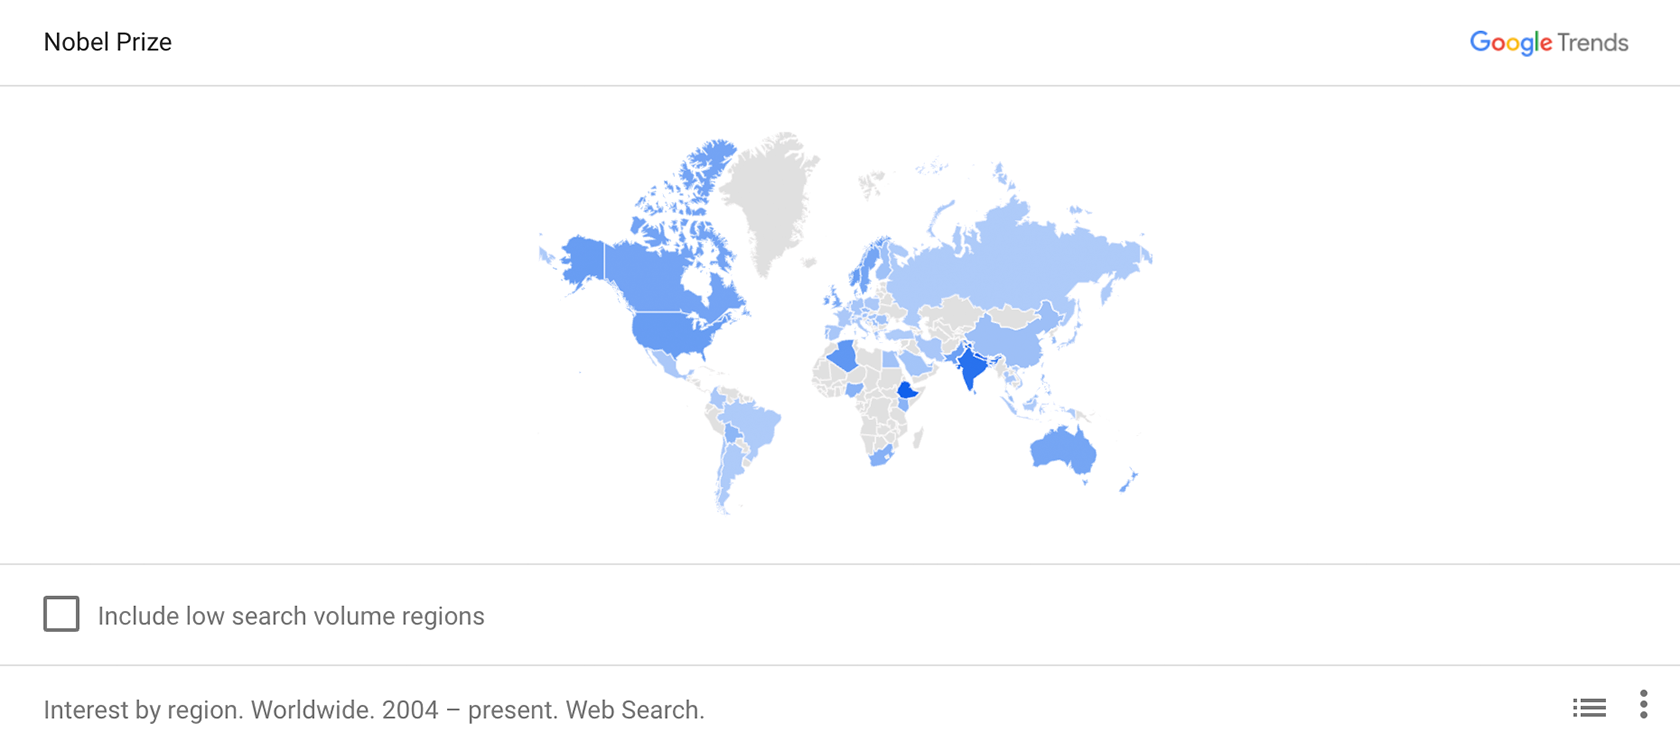 Google Trends - Nobel Prize interest by region